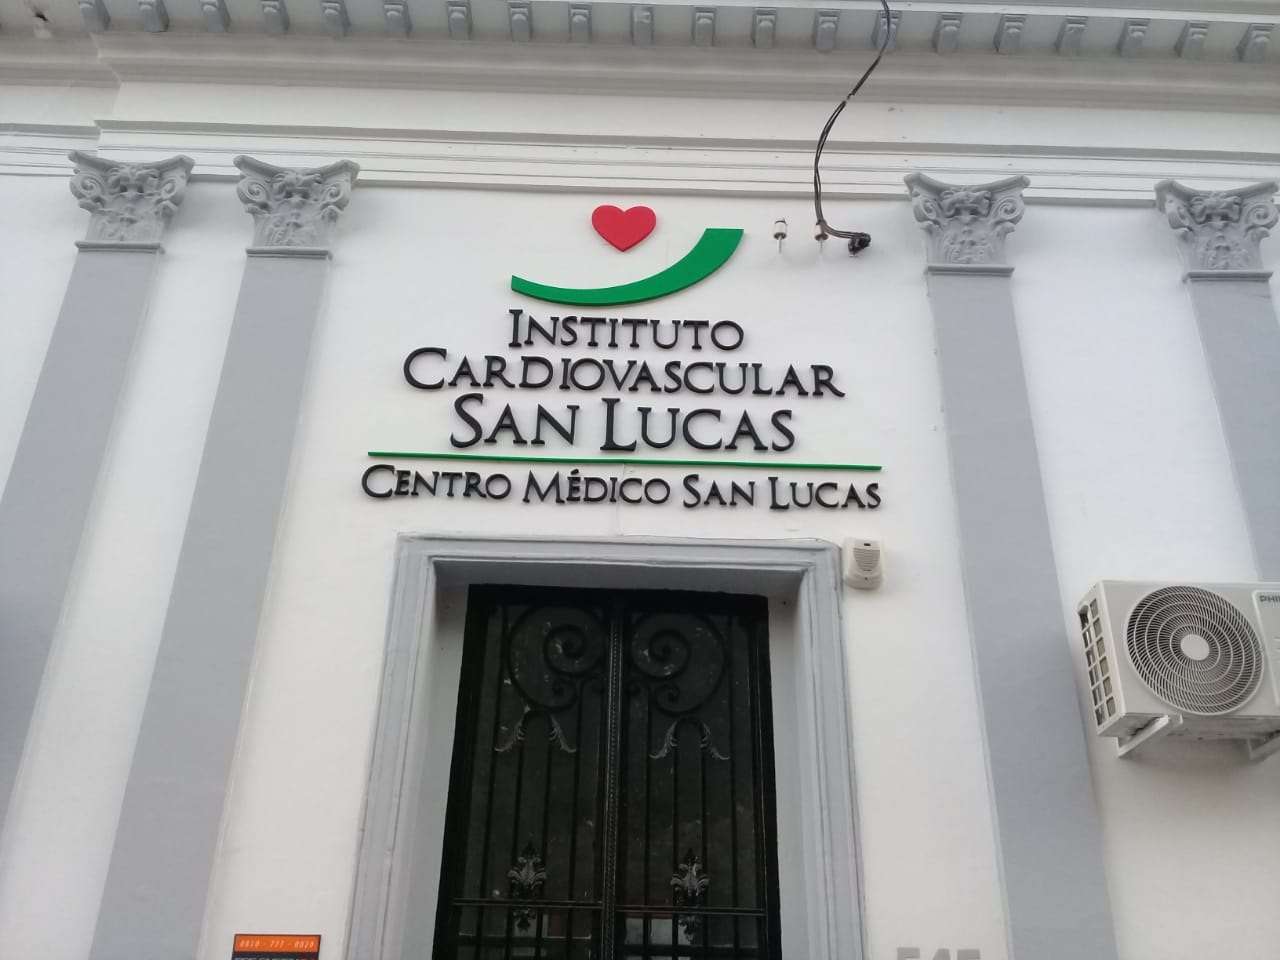 Centro Médico San Lucas abre su propio Instituto Cardiovascular 